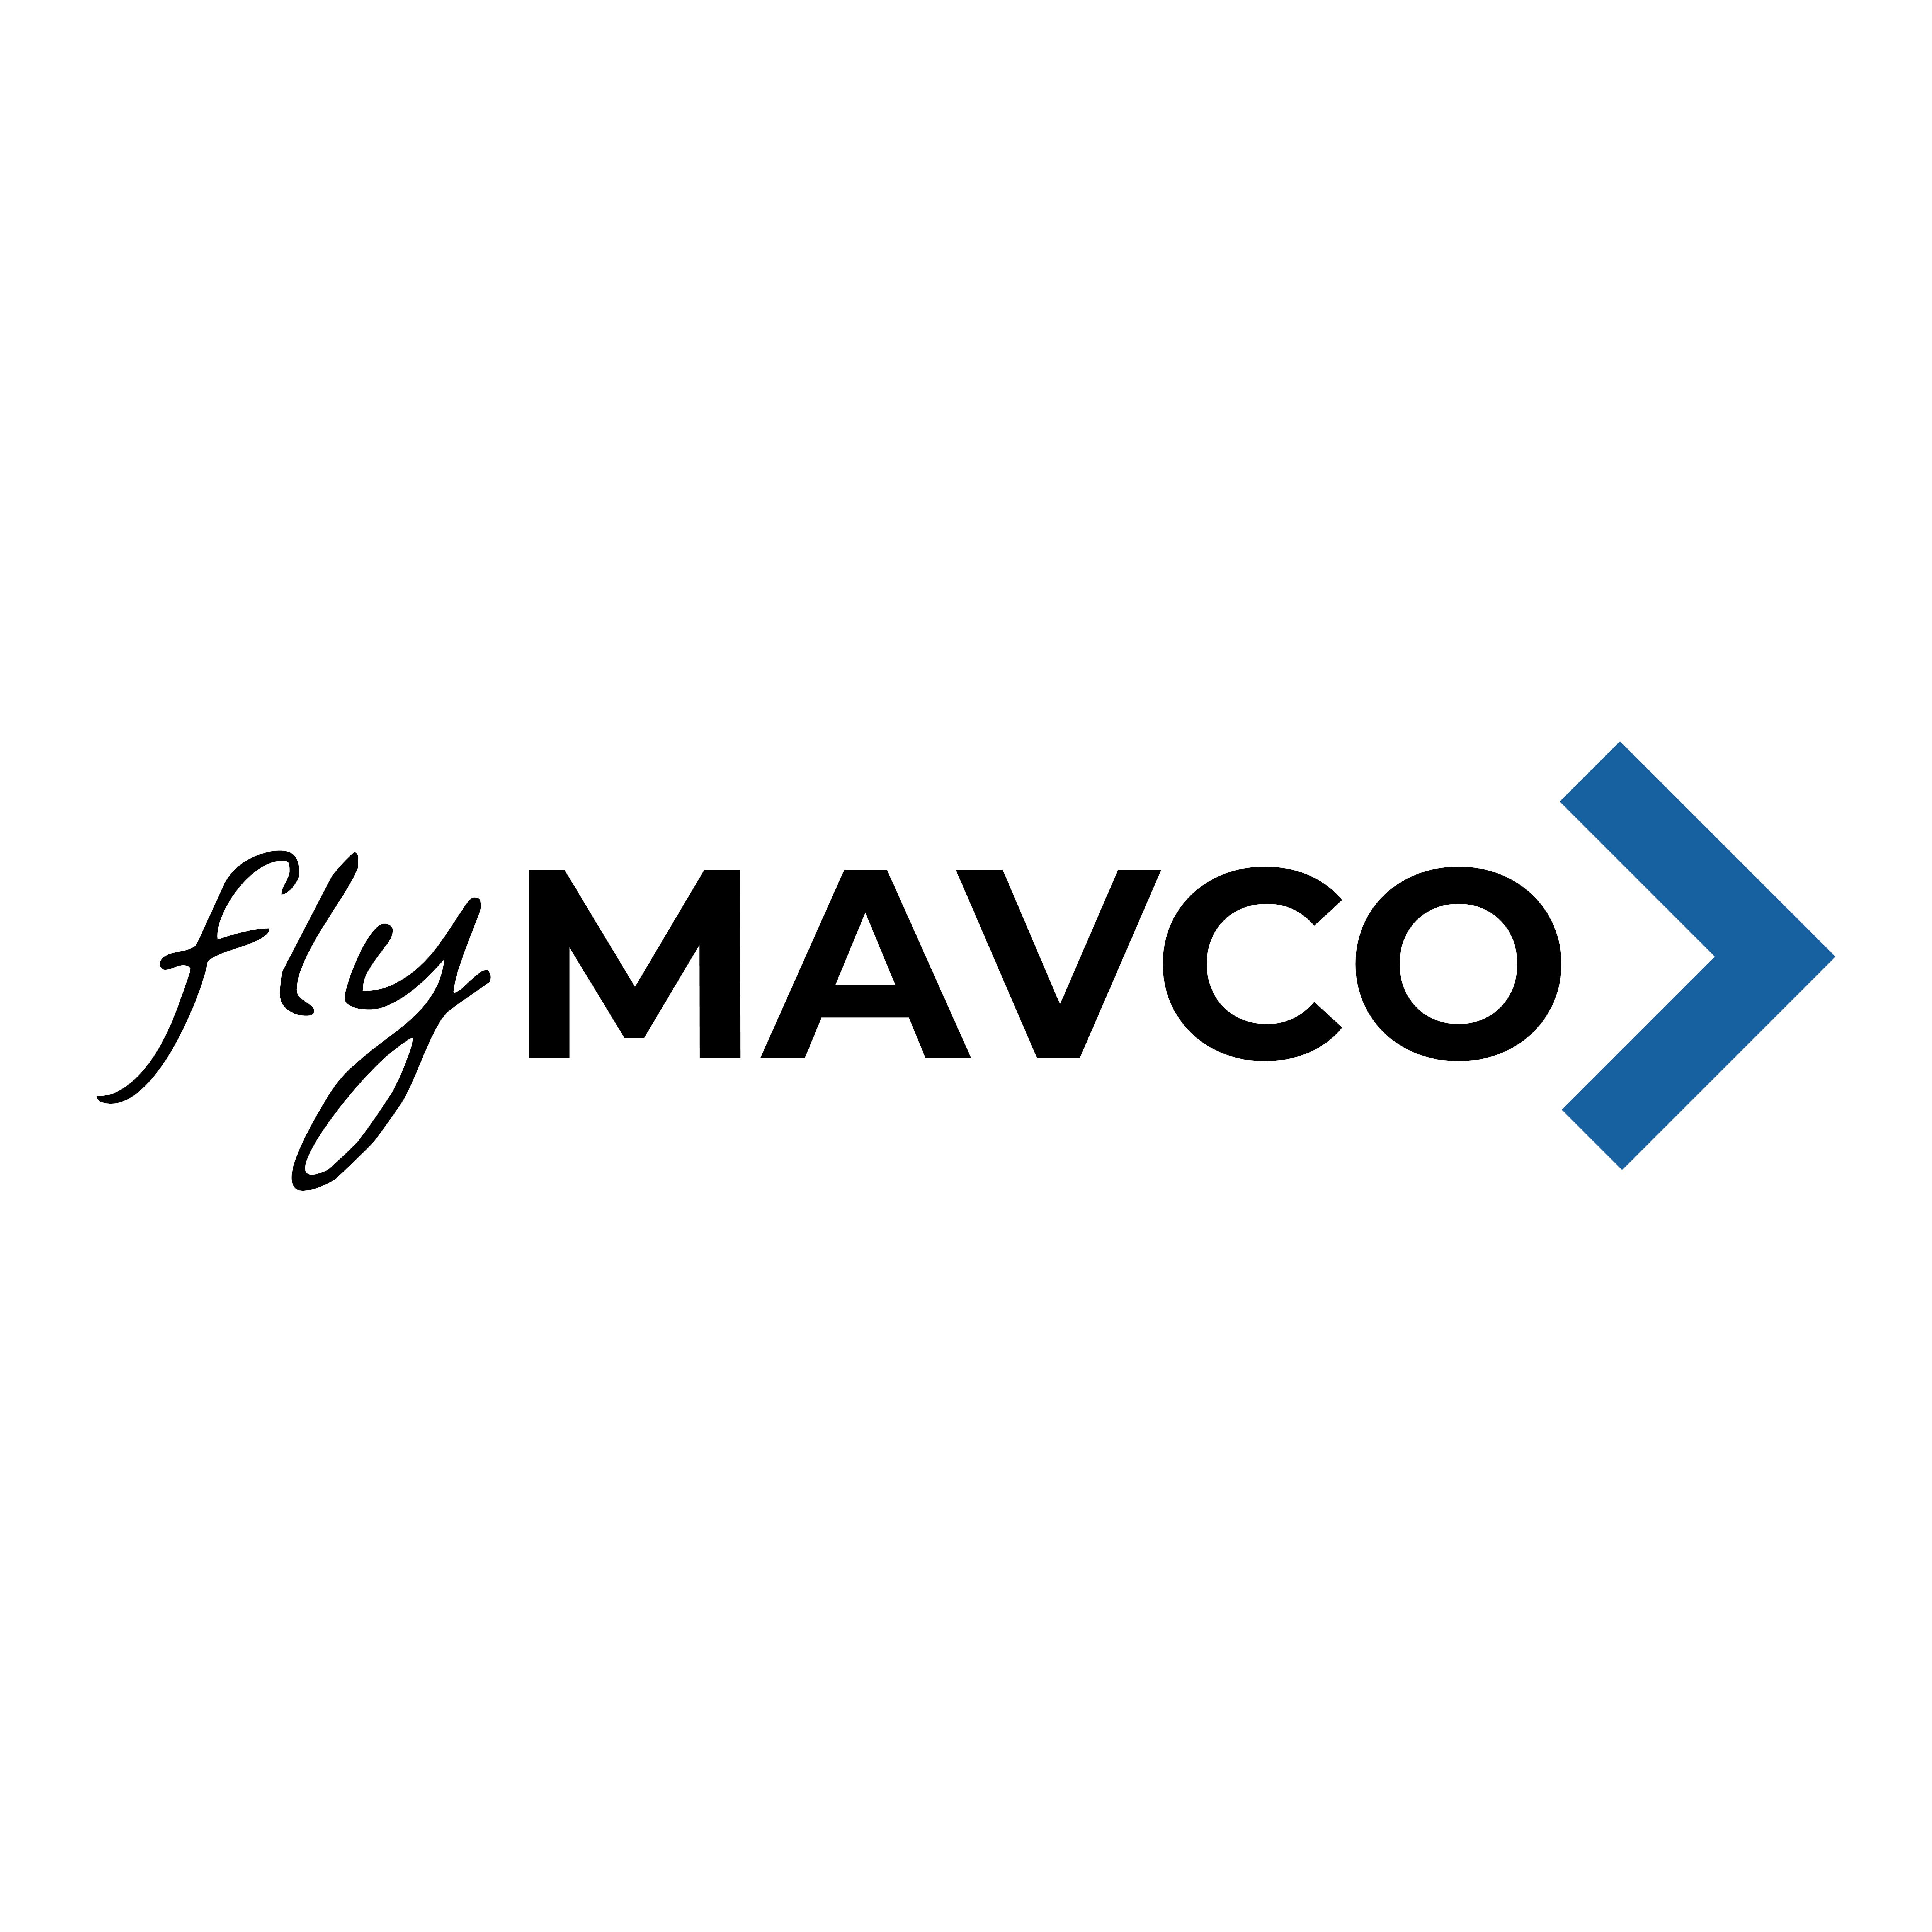 flyMAVCO Charter